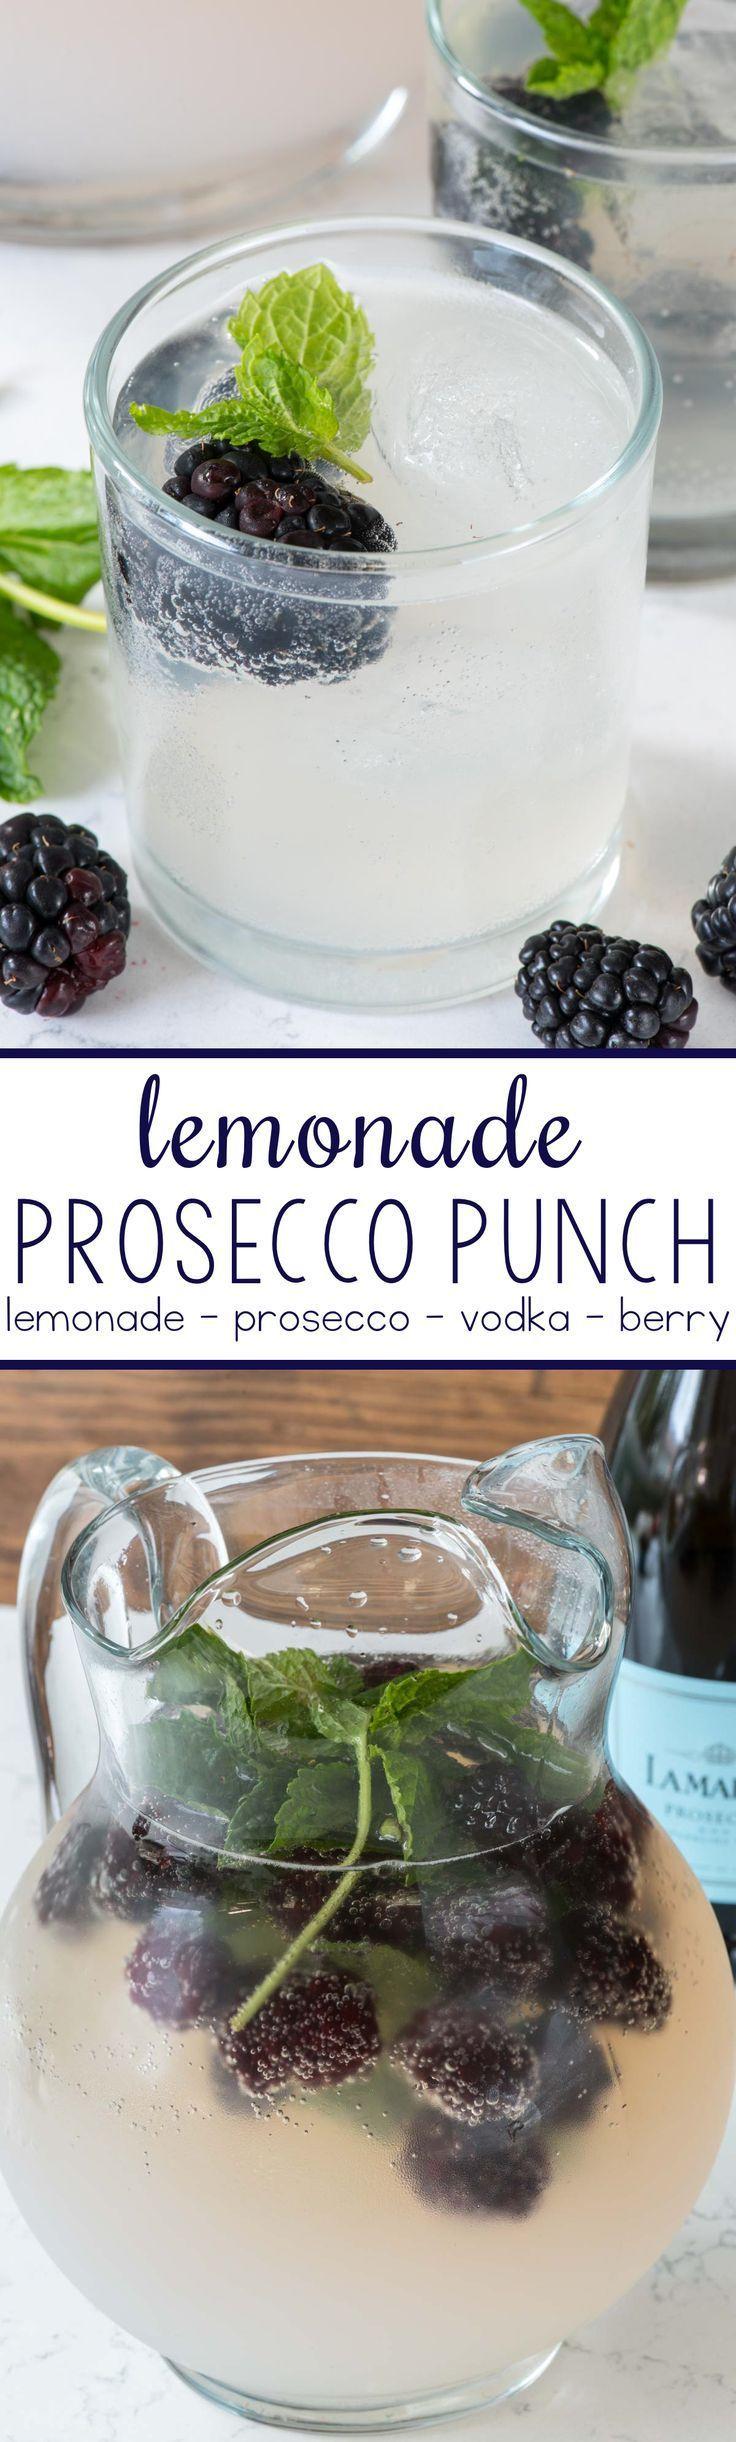 Wedding - Lemonade Prosecco Punch